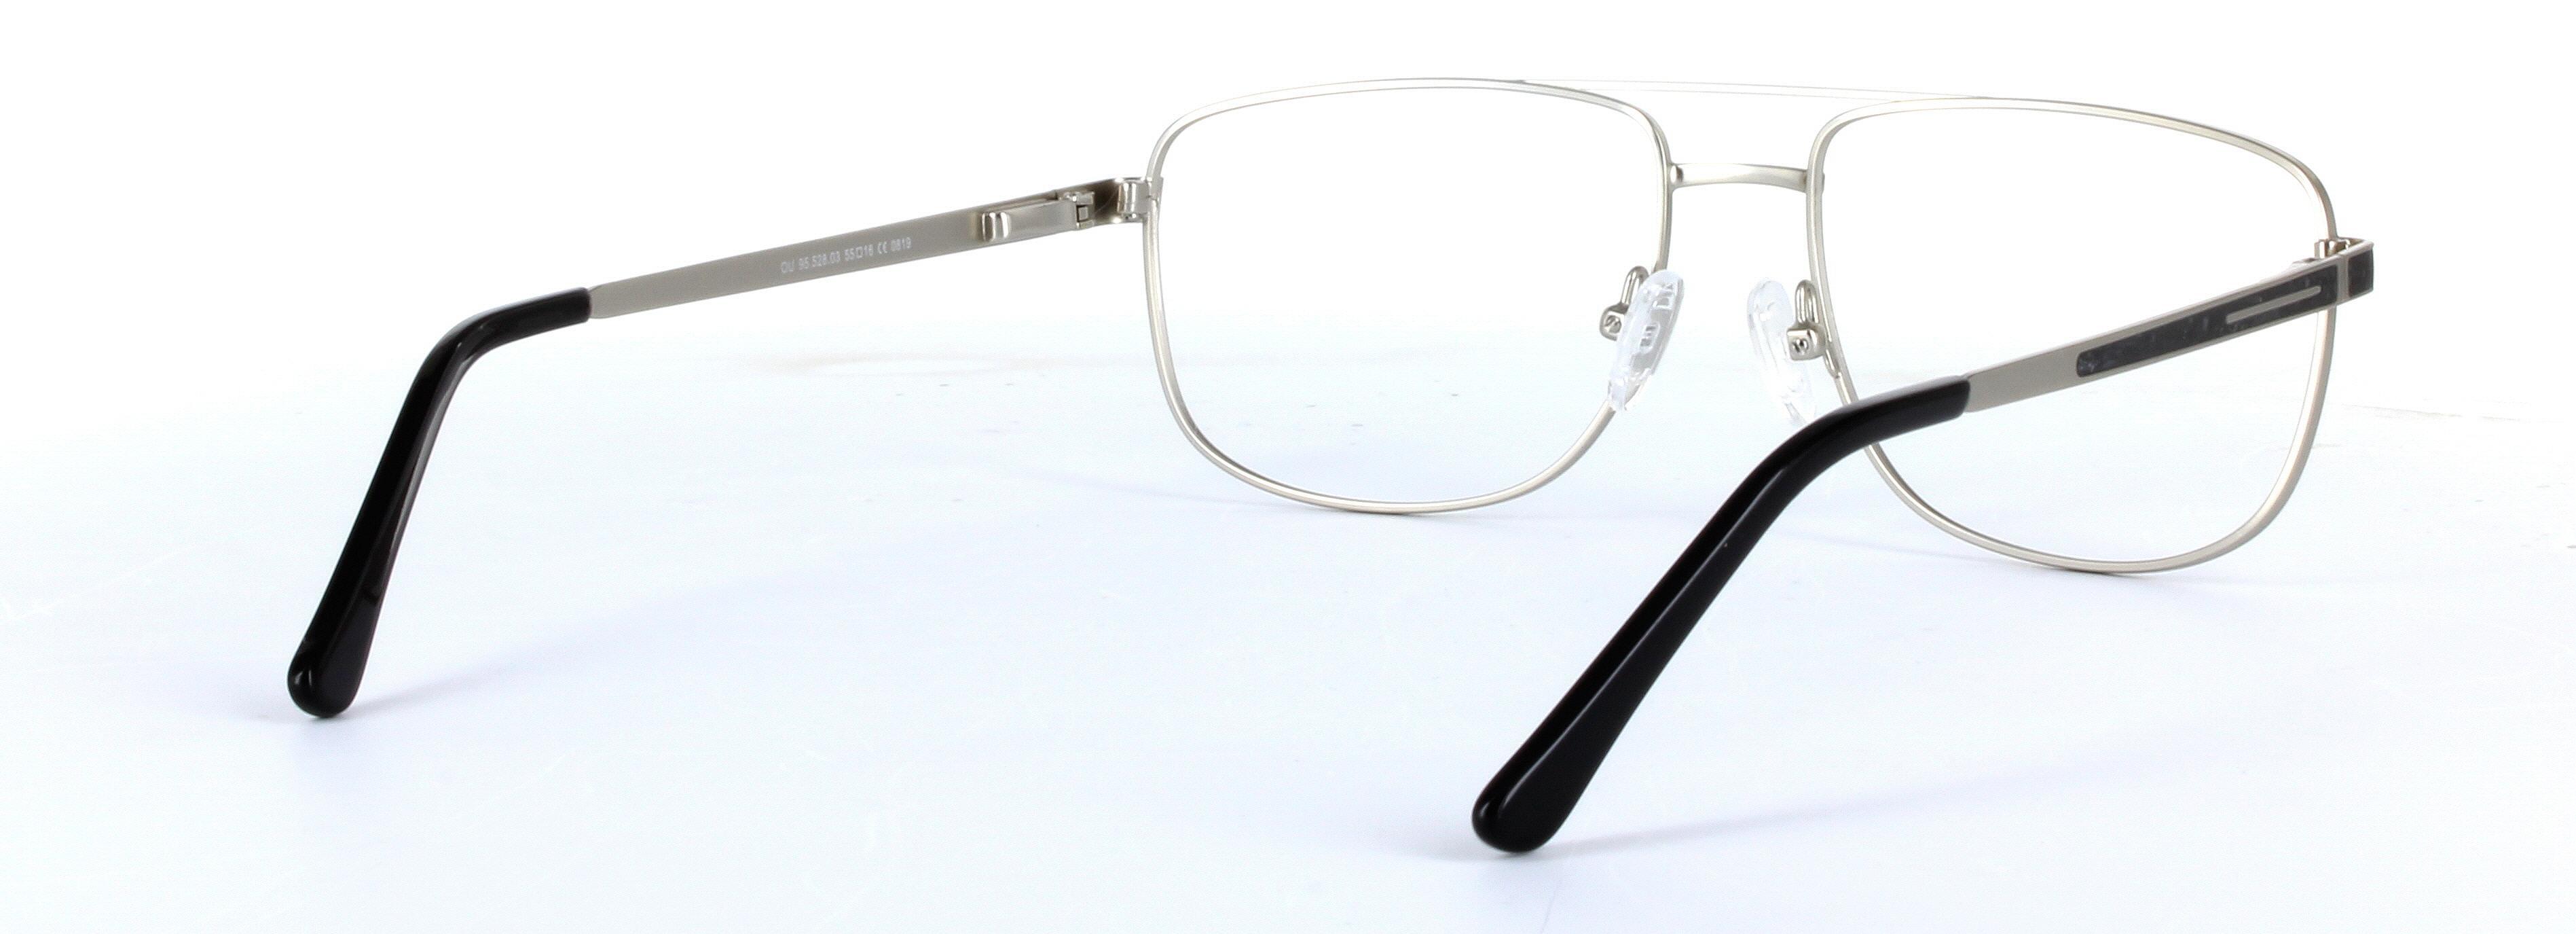 Marlowe Silver Full Rim Oval Metal Glasses - Image View 4